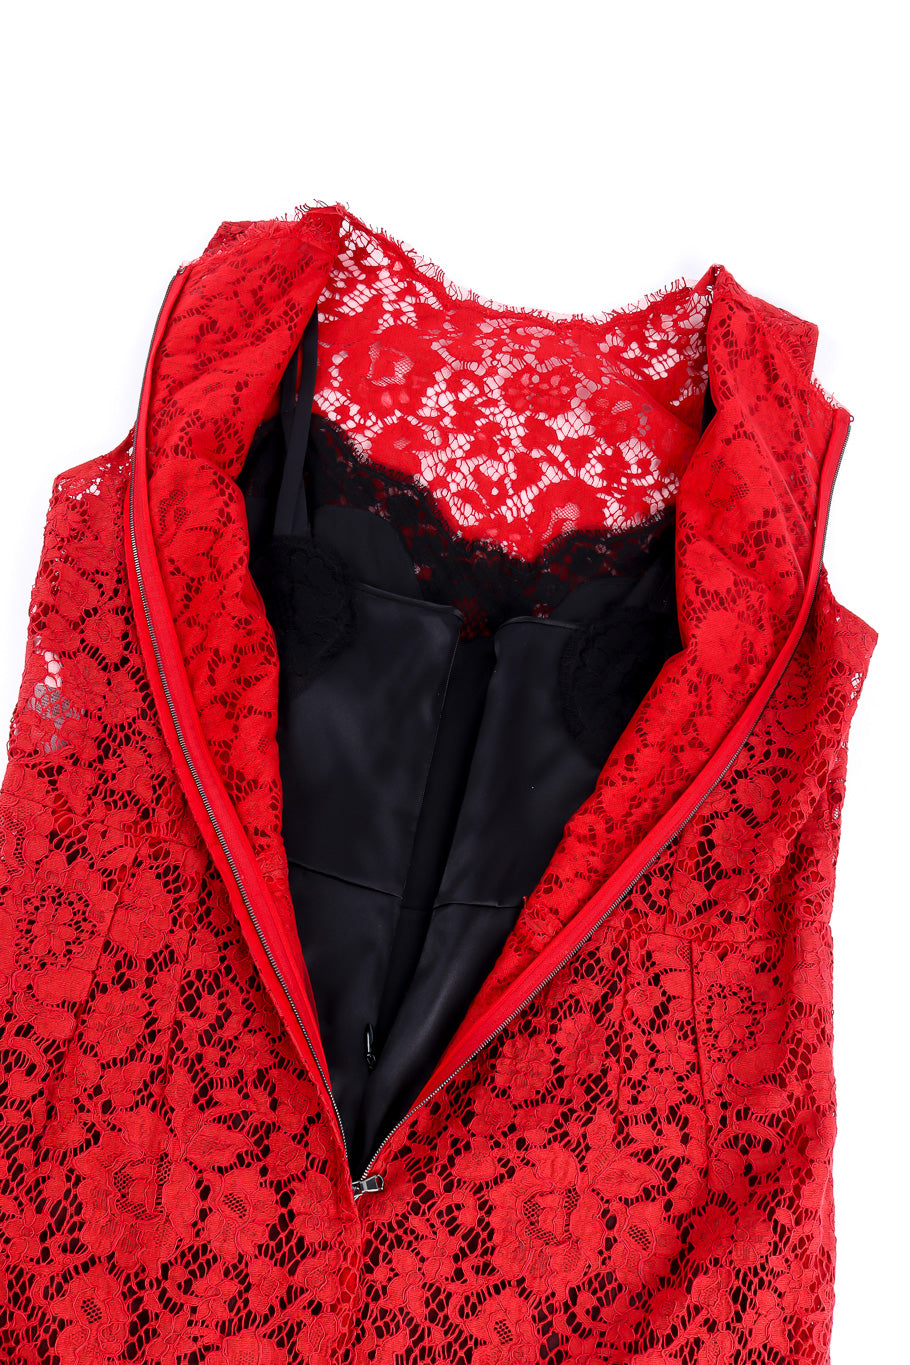 Dolce & Gabbana scarlet midi dress zipper and slip details @recessla